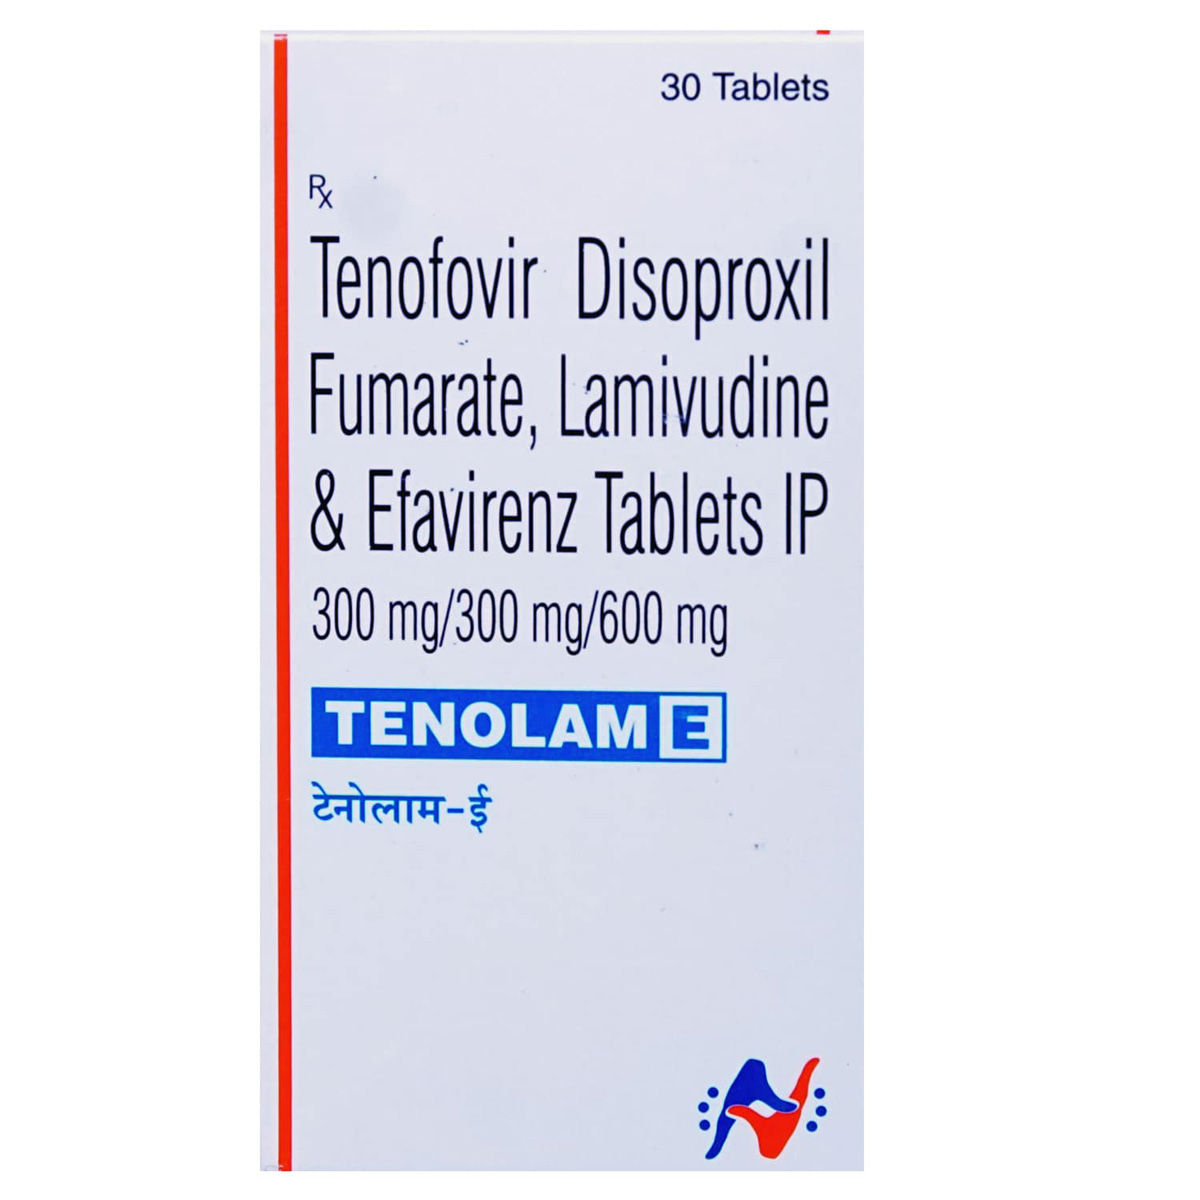 Buy Tenolam E Tablet 30's Online